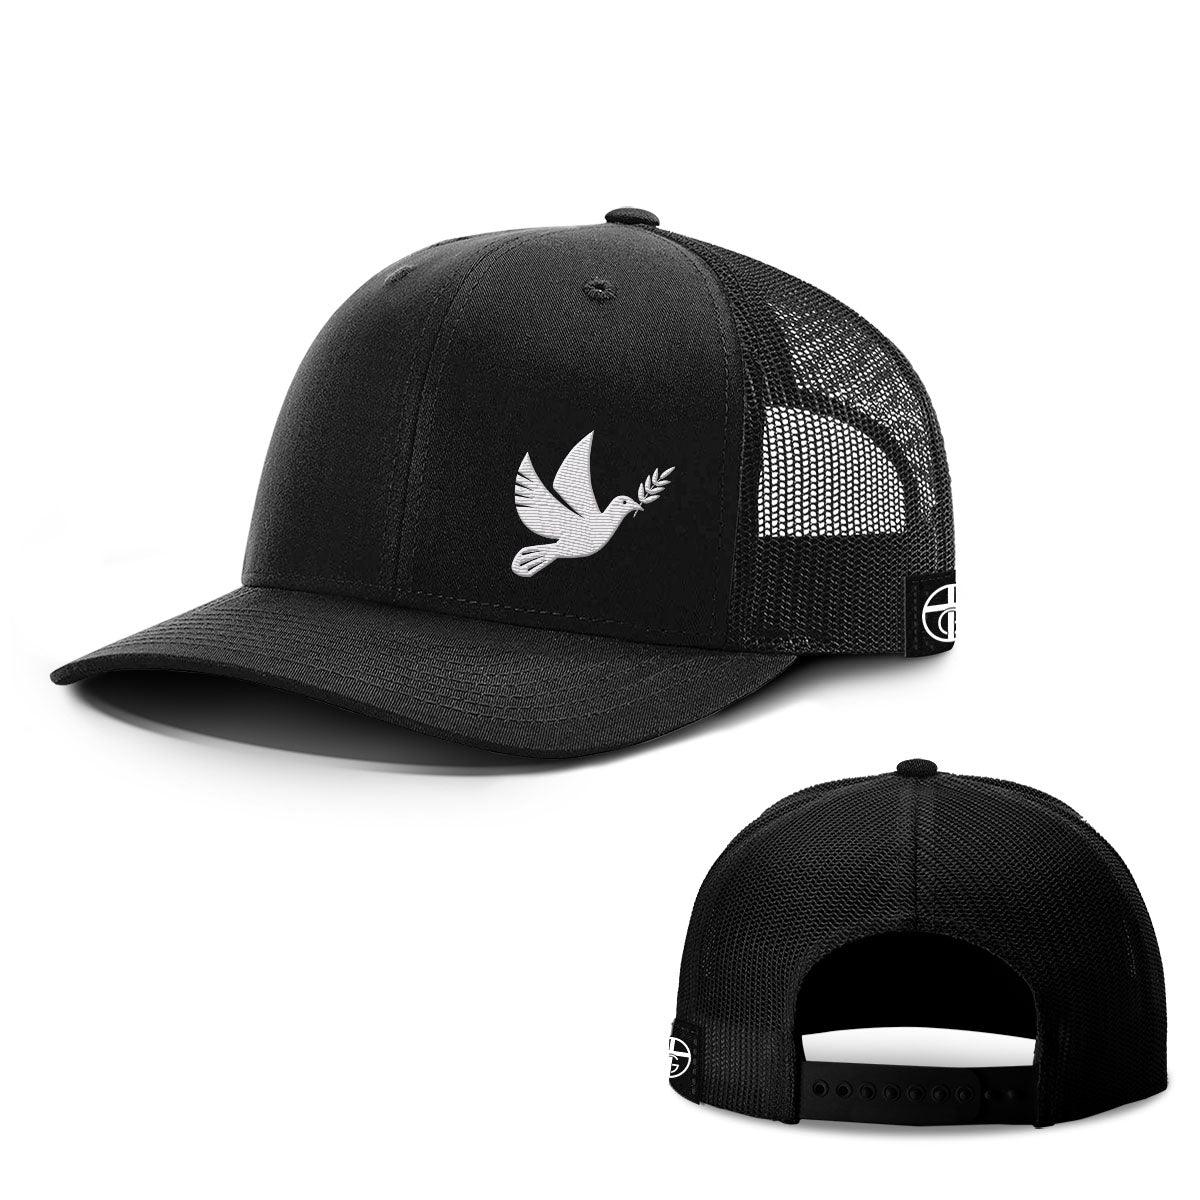 Dove Lower Left Hats